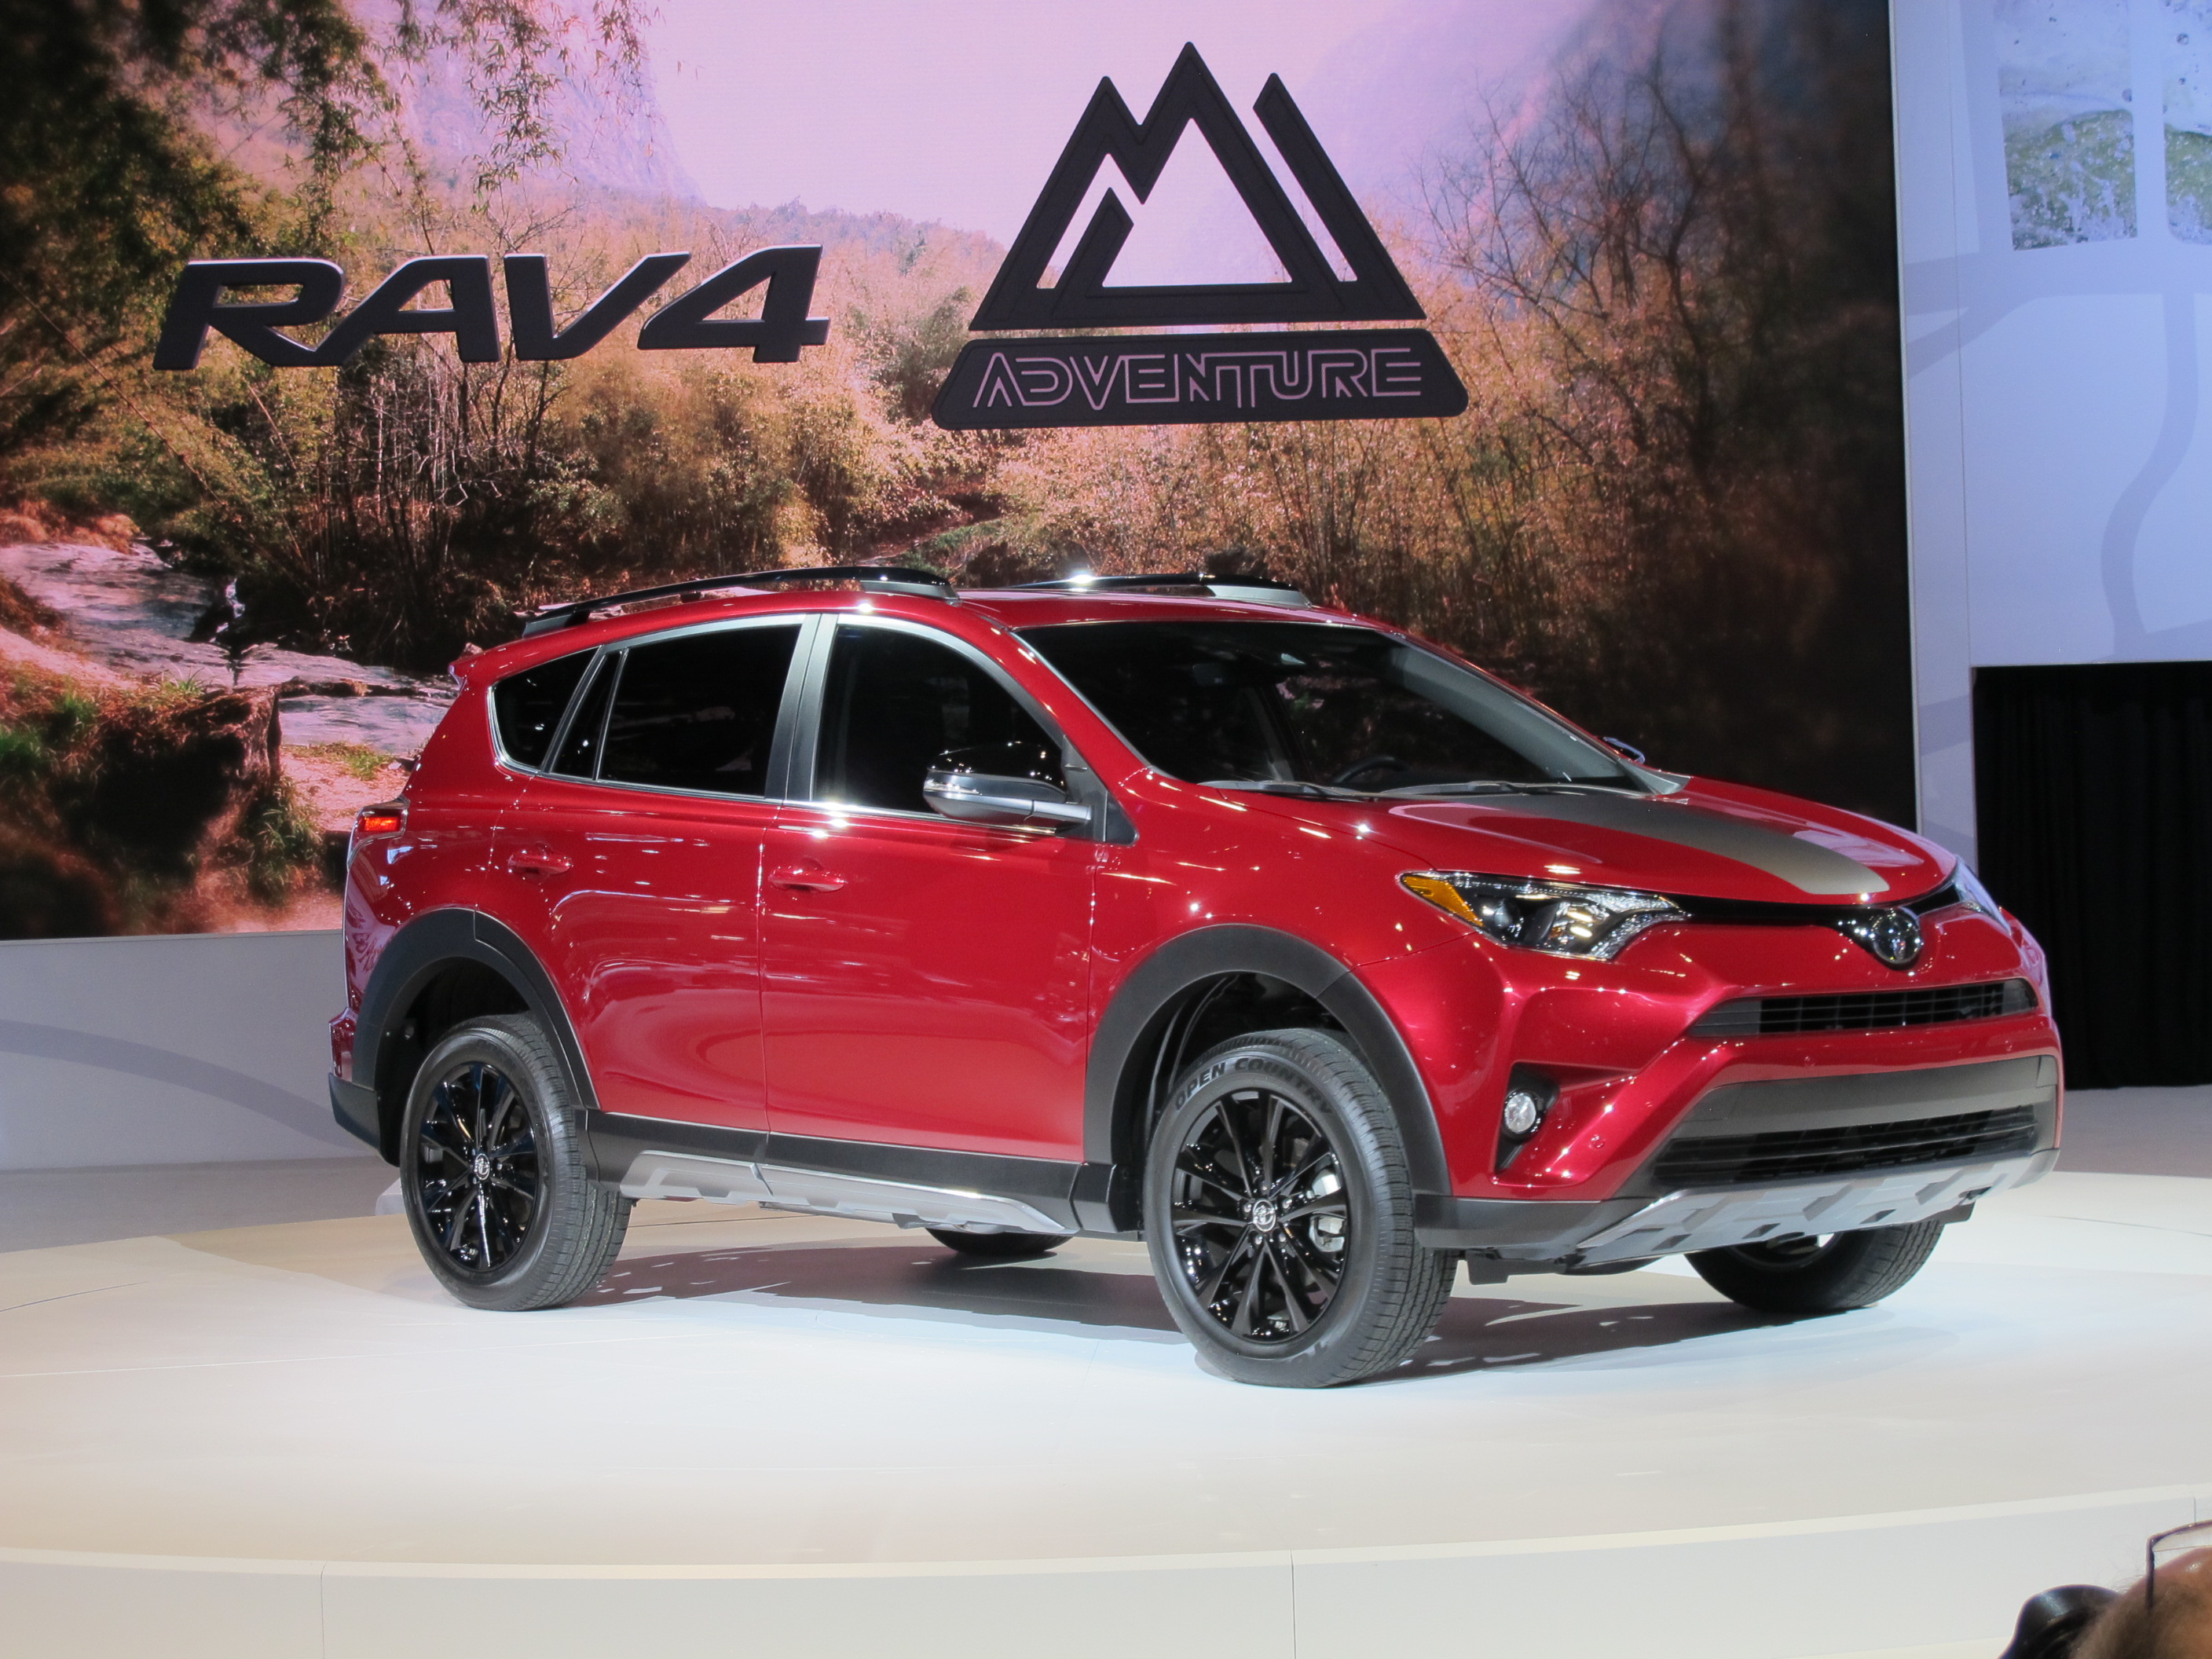 2018 Toyota RAV4 Adventure Gets A Price